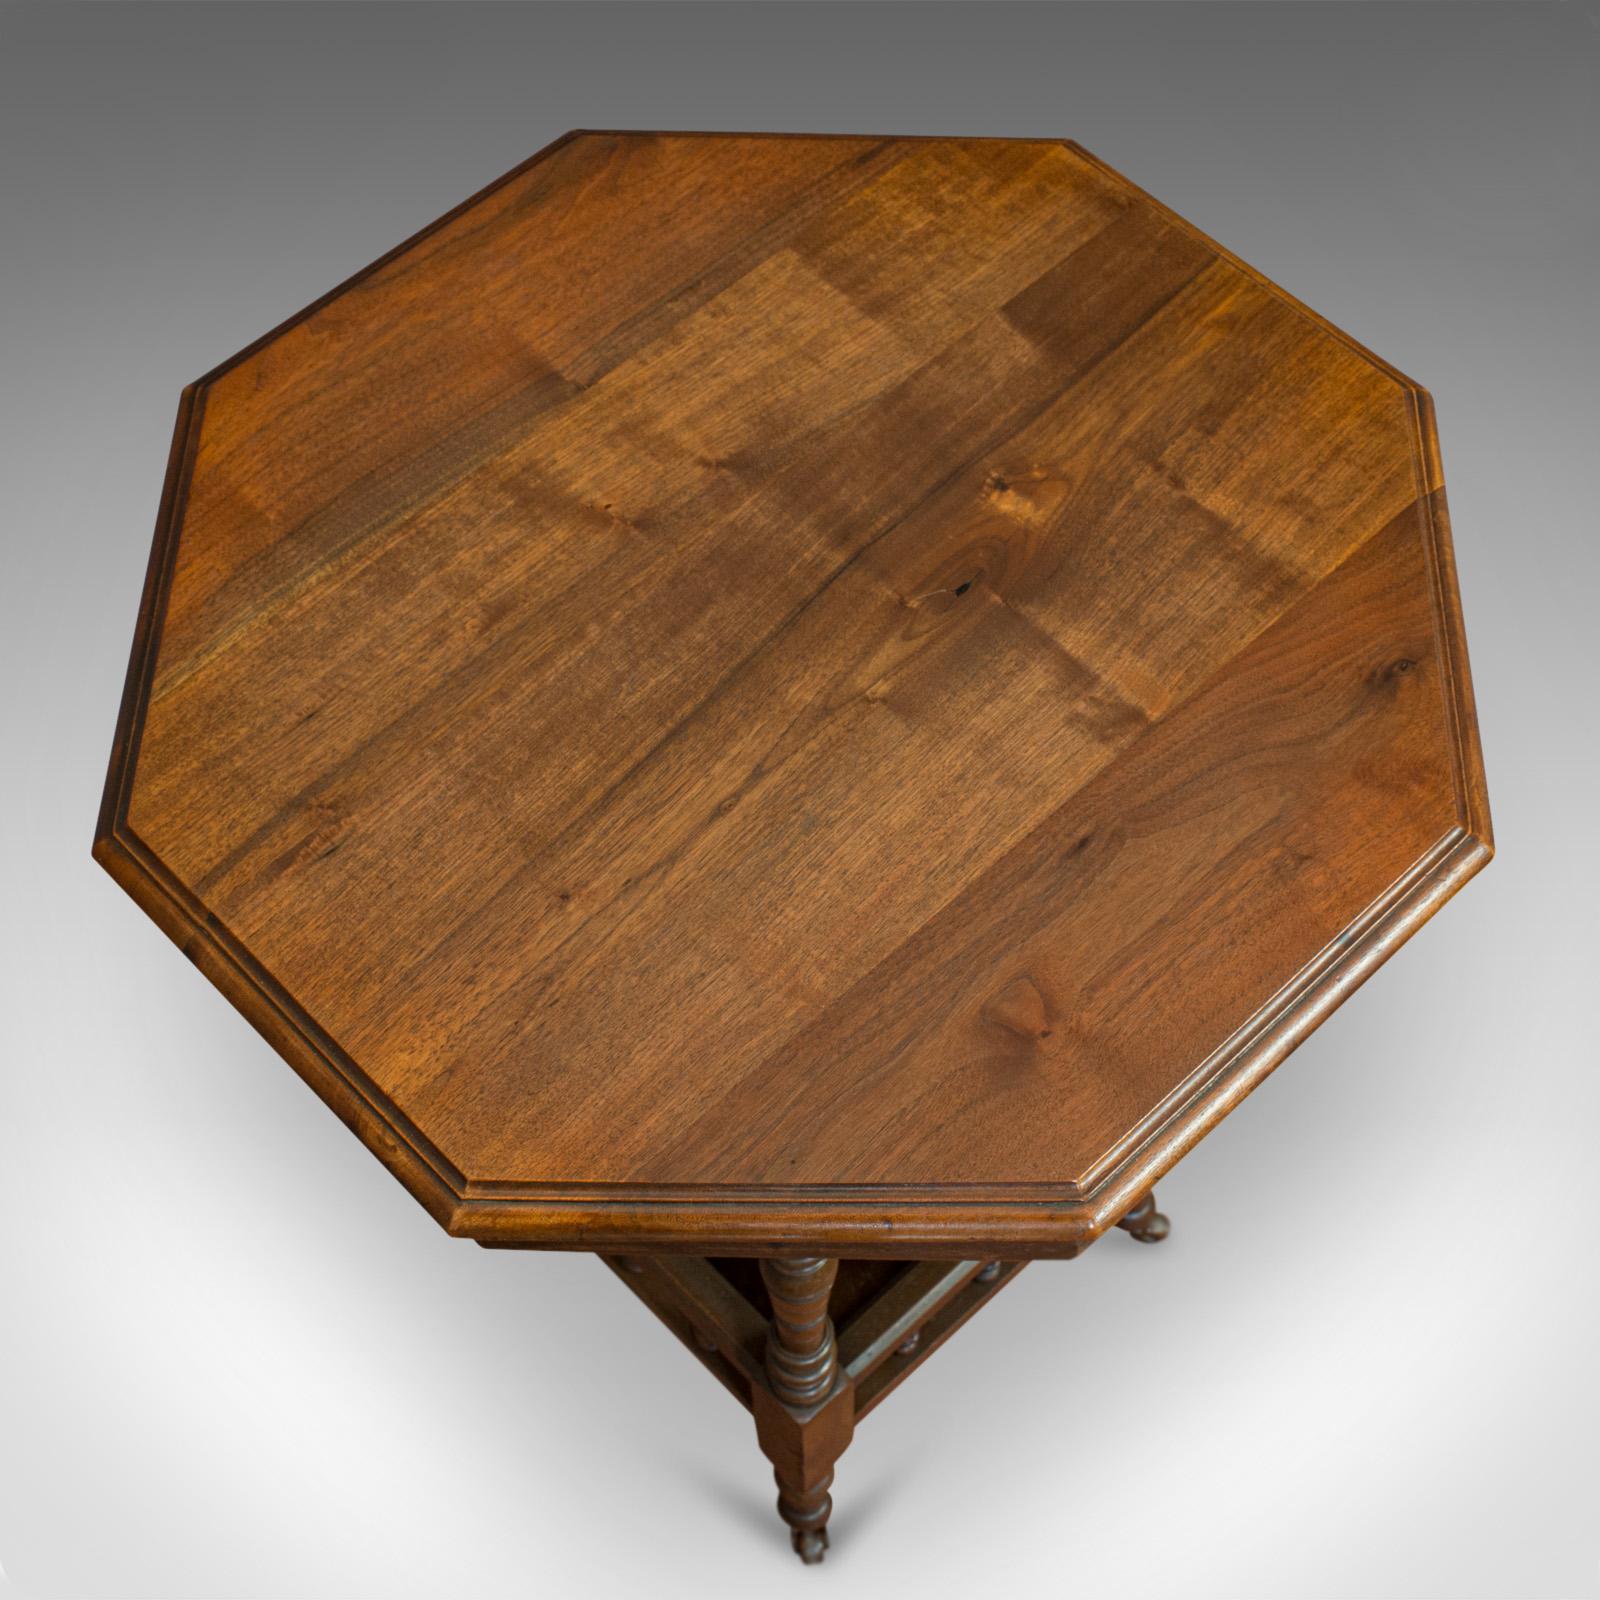 20th Century Antique Lamp Table, English, Walnut, Octagonal, Side, Games, Edwardian